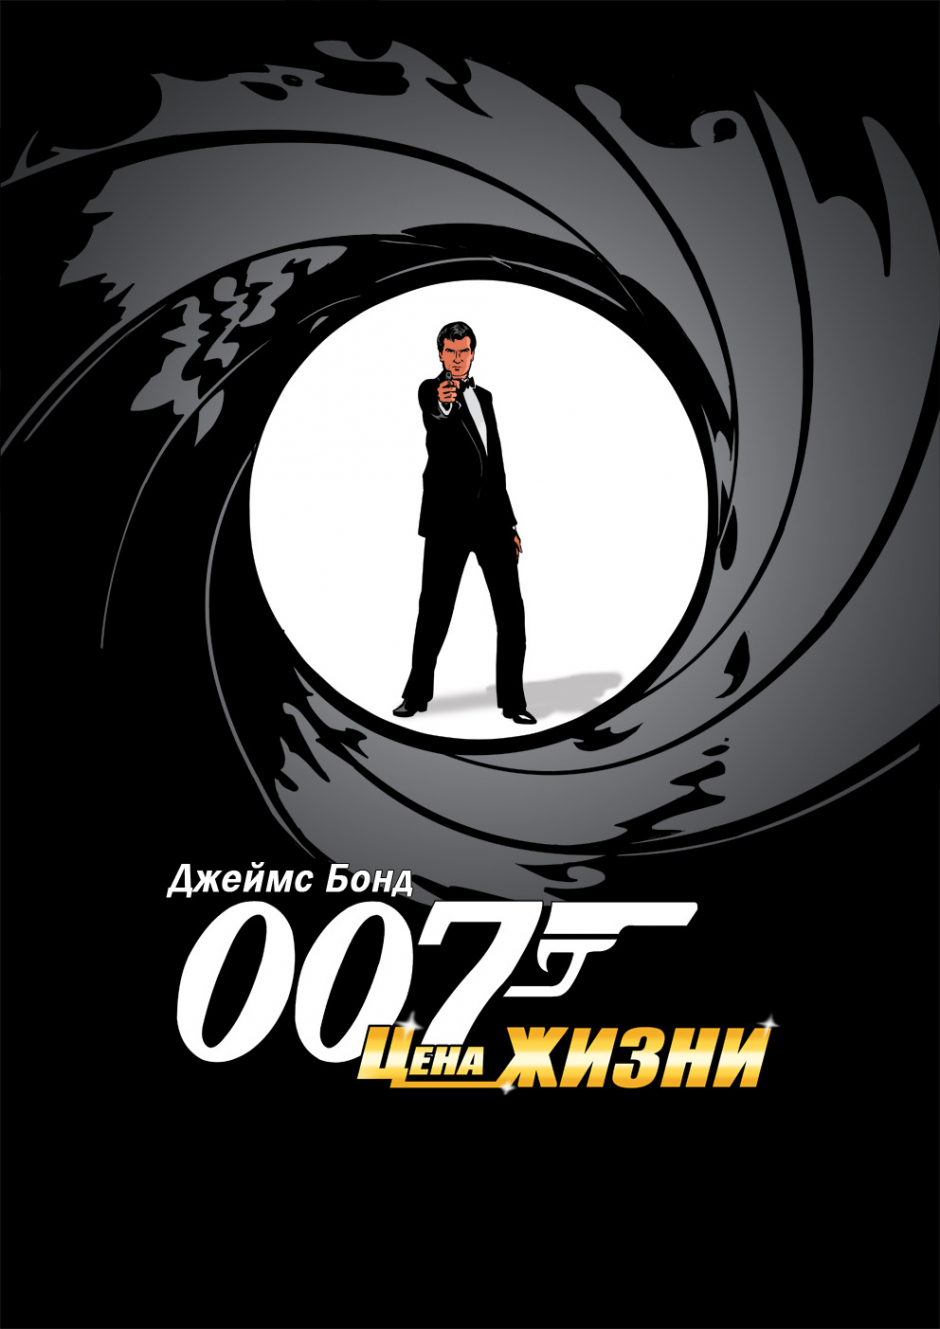 007 Цена жизни - Станислав Щепин